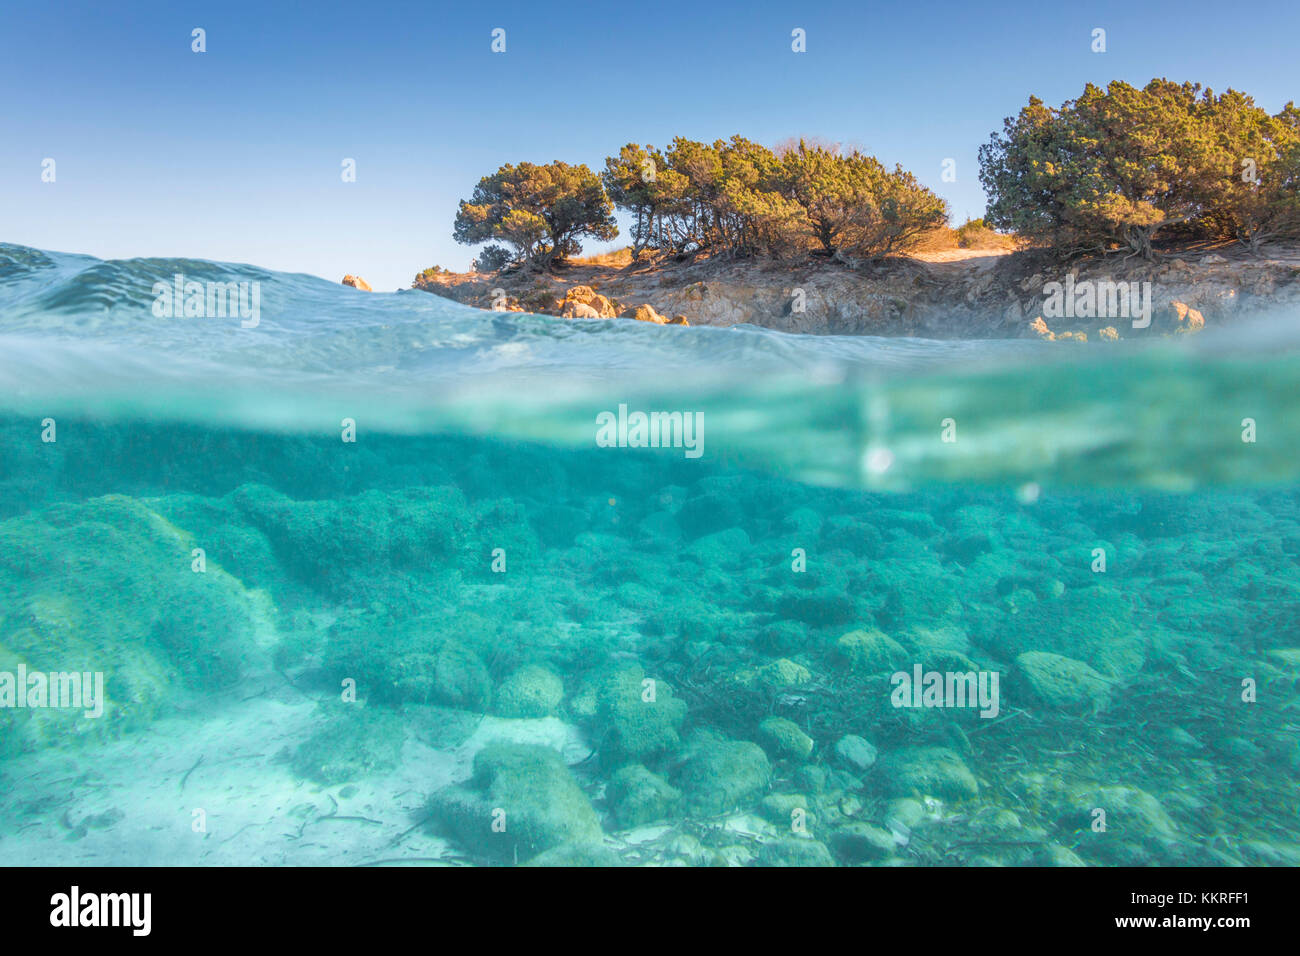 Half underwater photo with the sea bed and trees in Rena Bianca beach in Portisco (Olbia) Costa Smeralda, Olbia-Tempio province, Sardinia district, Italy Stock Photo